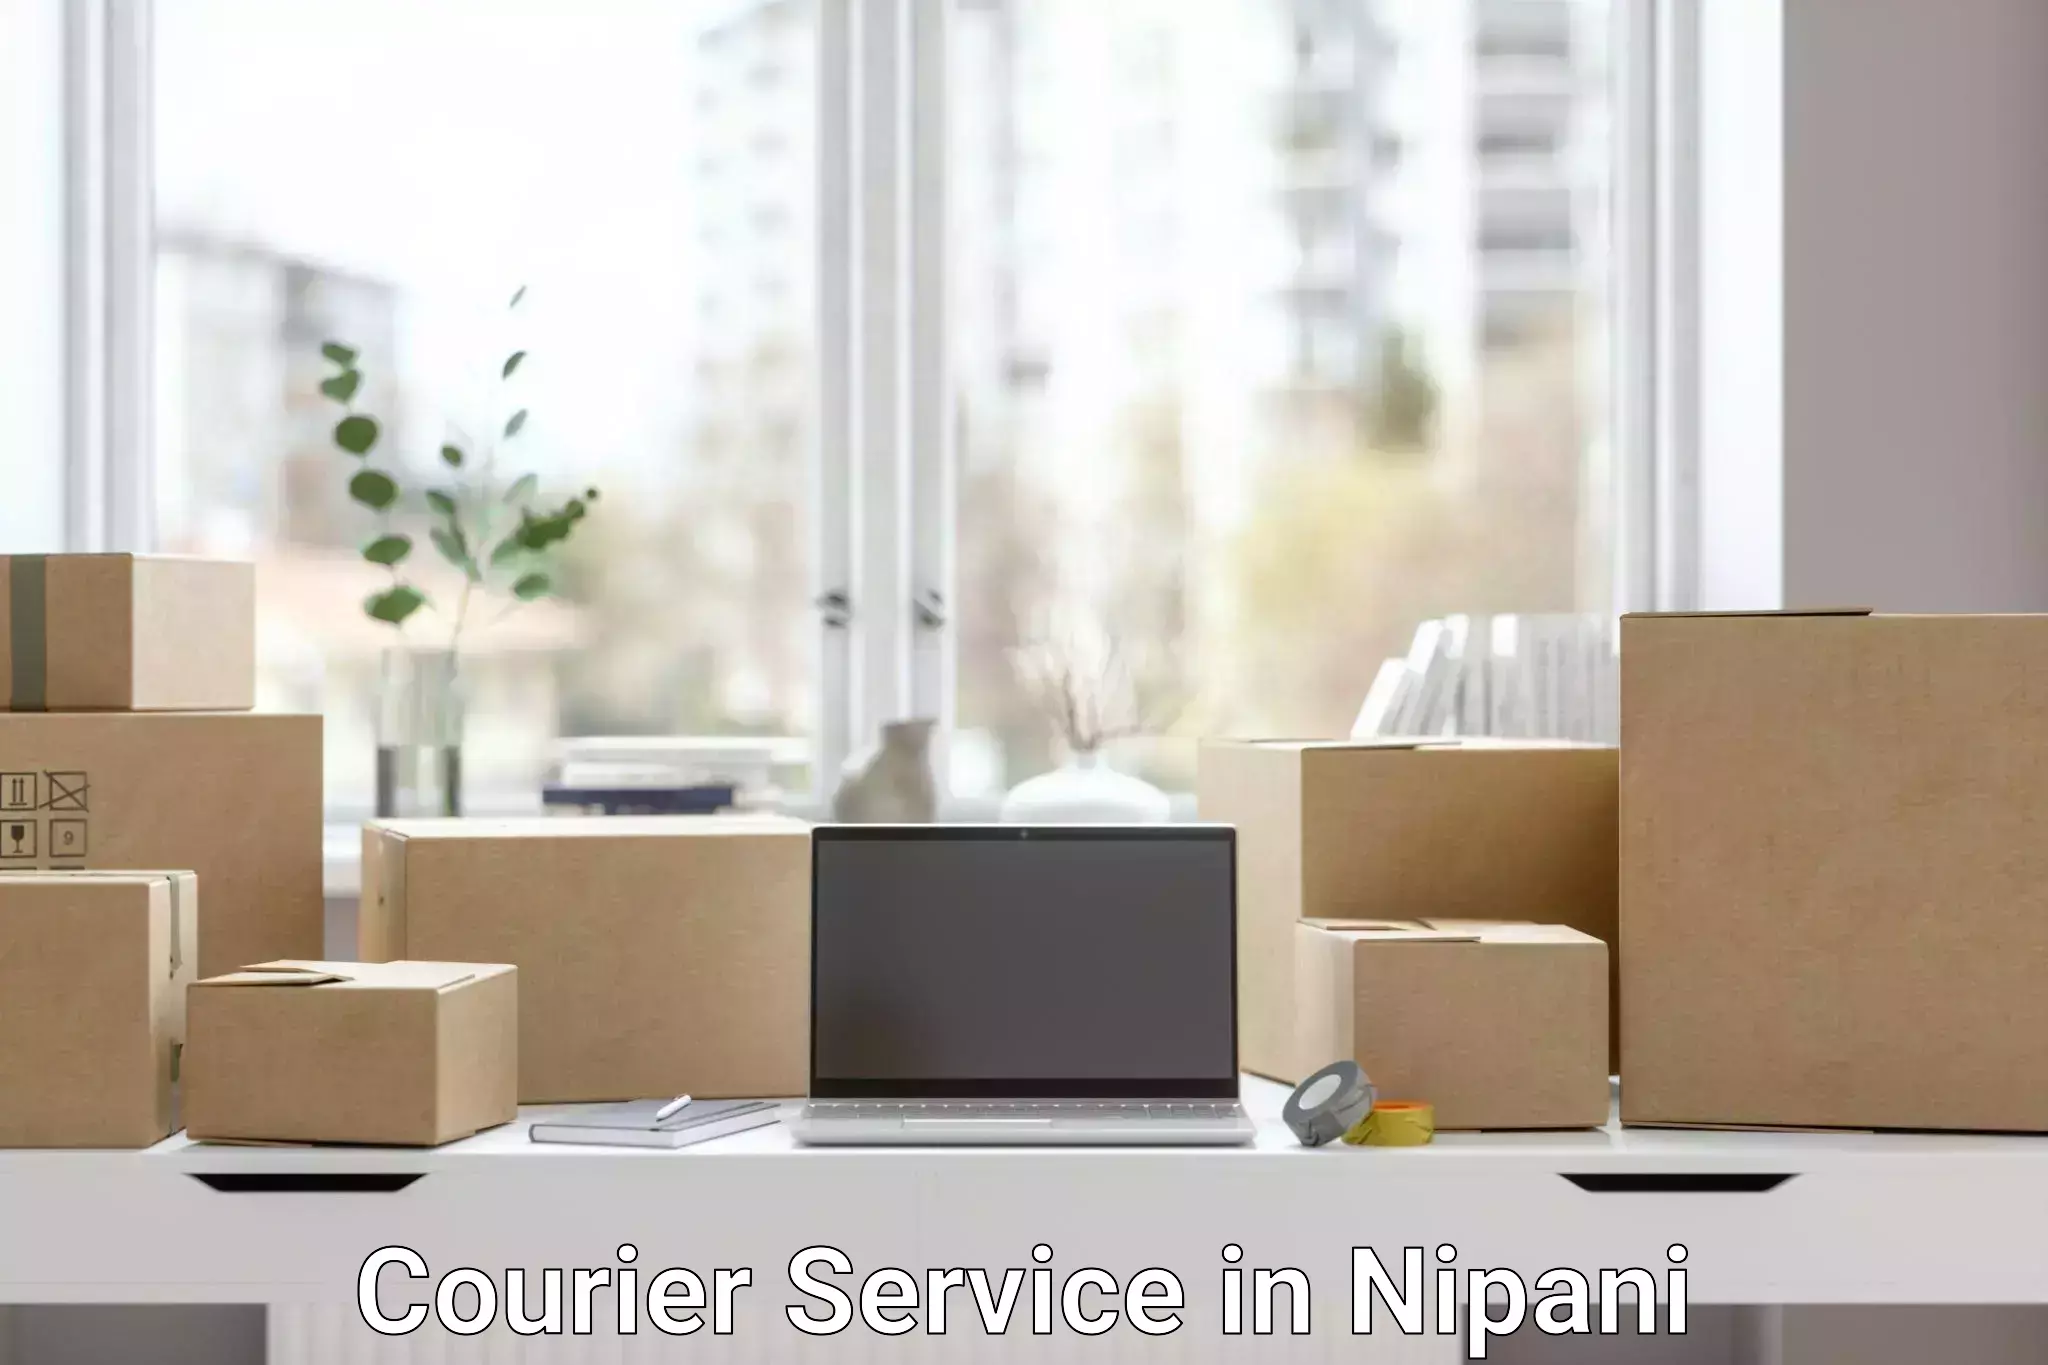 Efficient cargo handling in Nipani